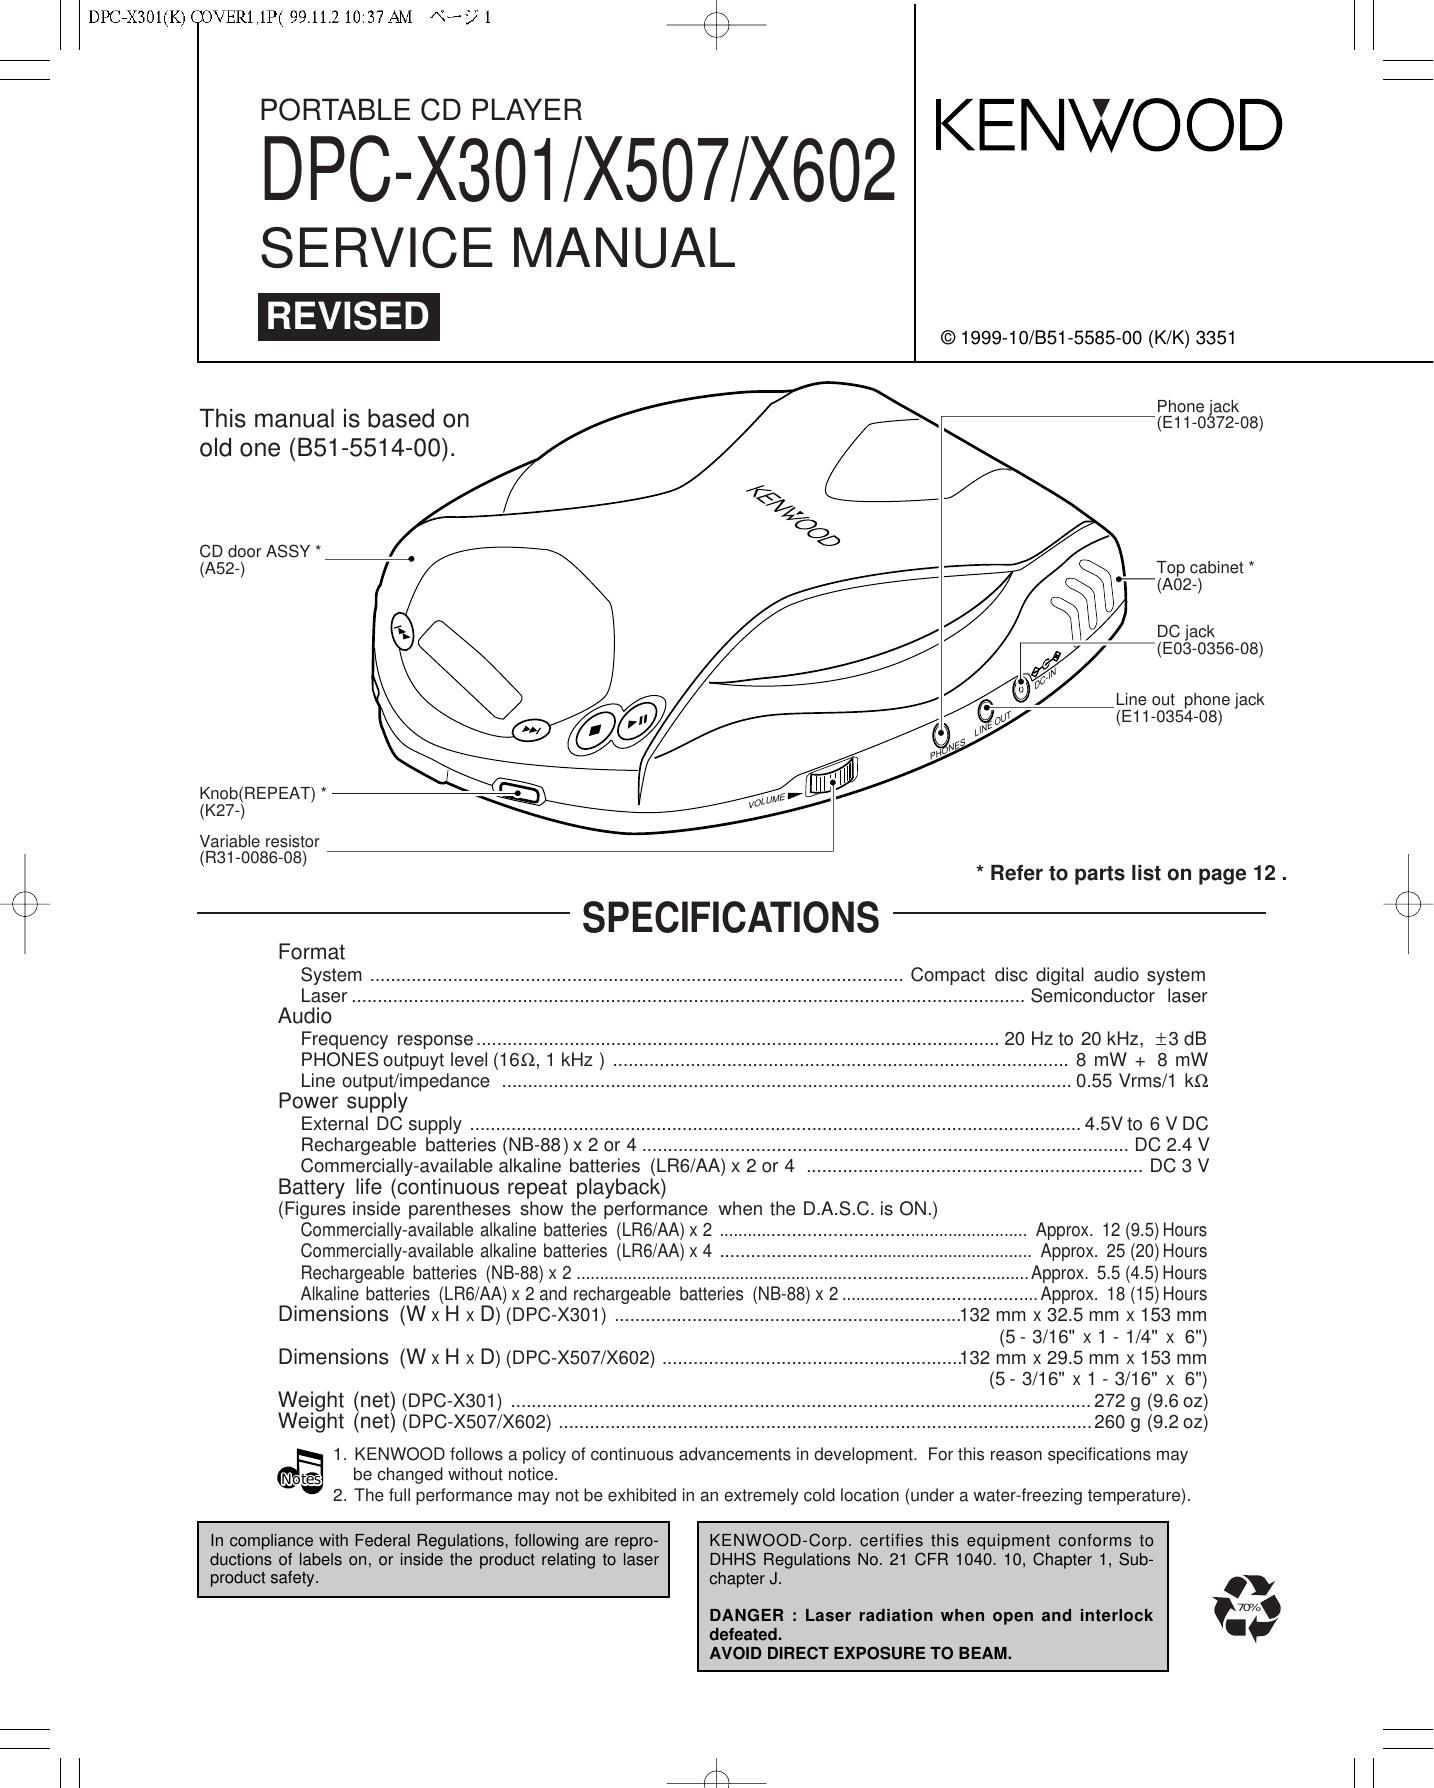 Kenwood DPCX 602 Service Manual